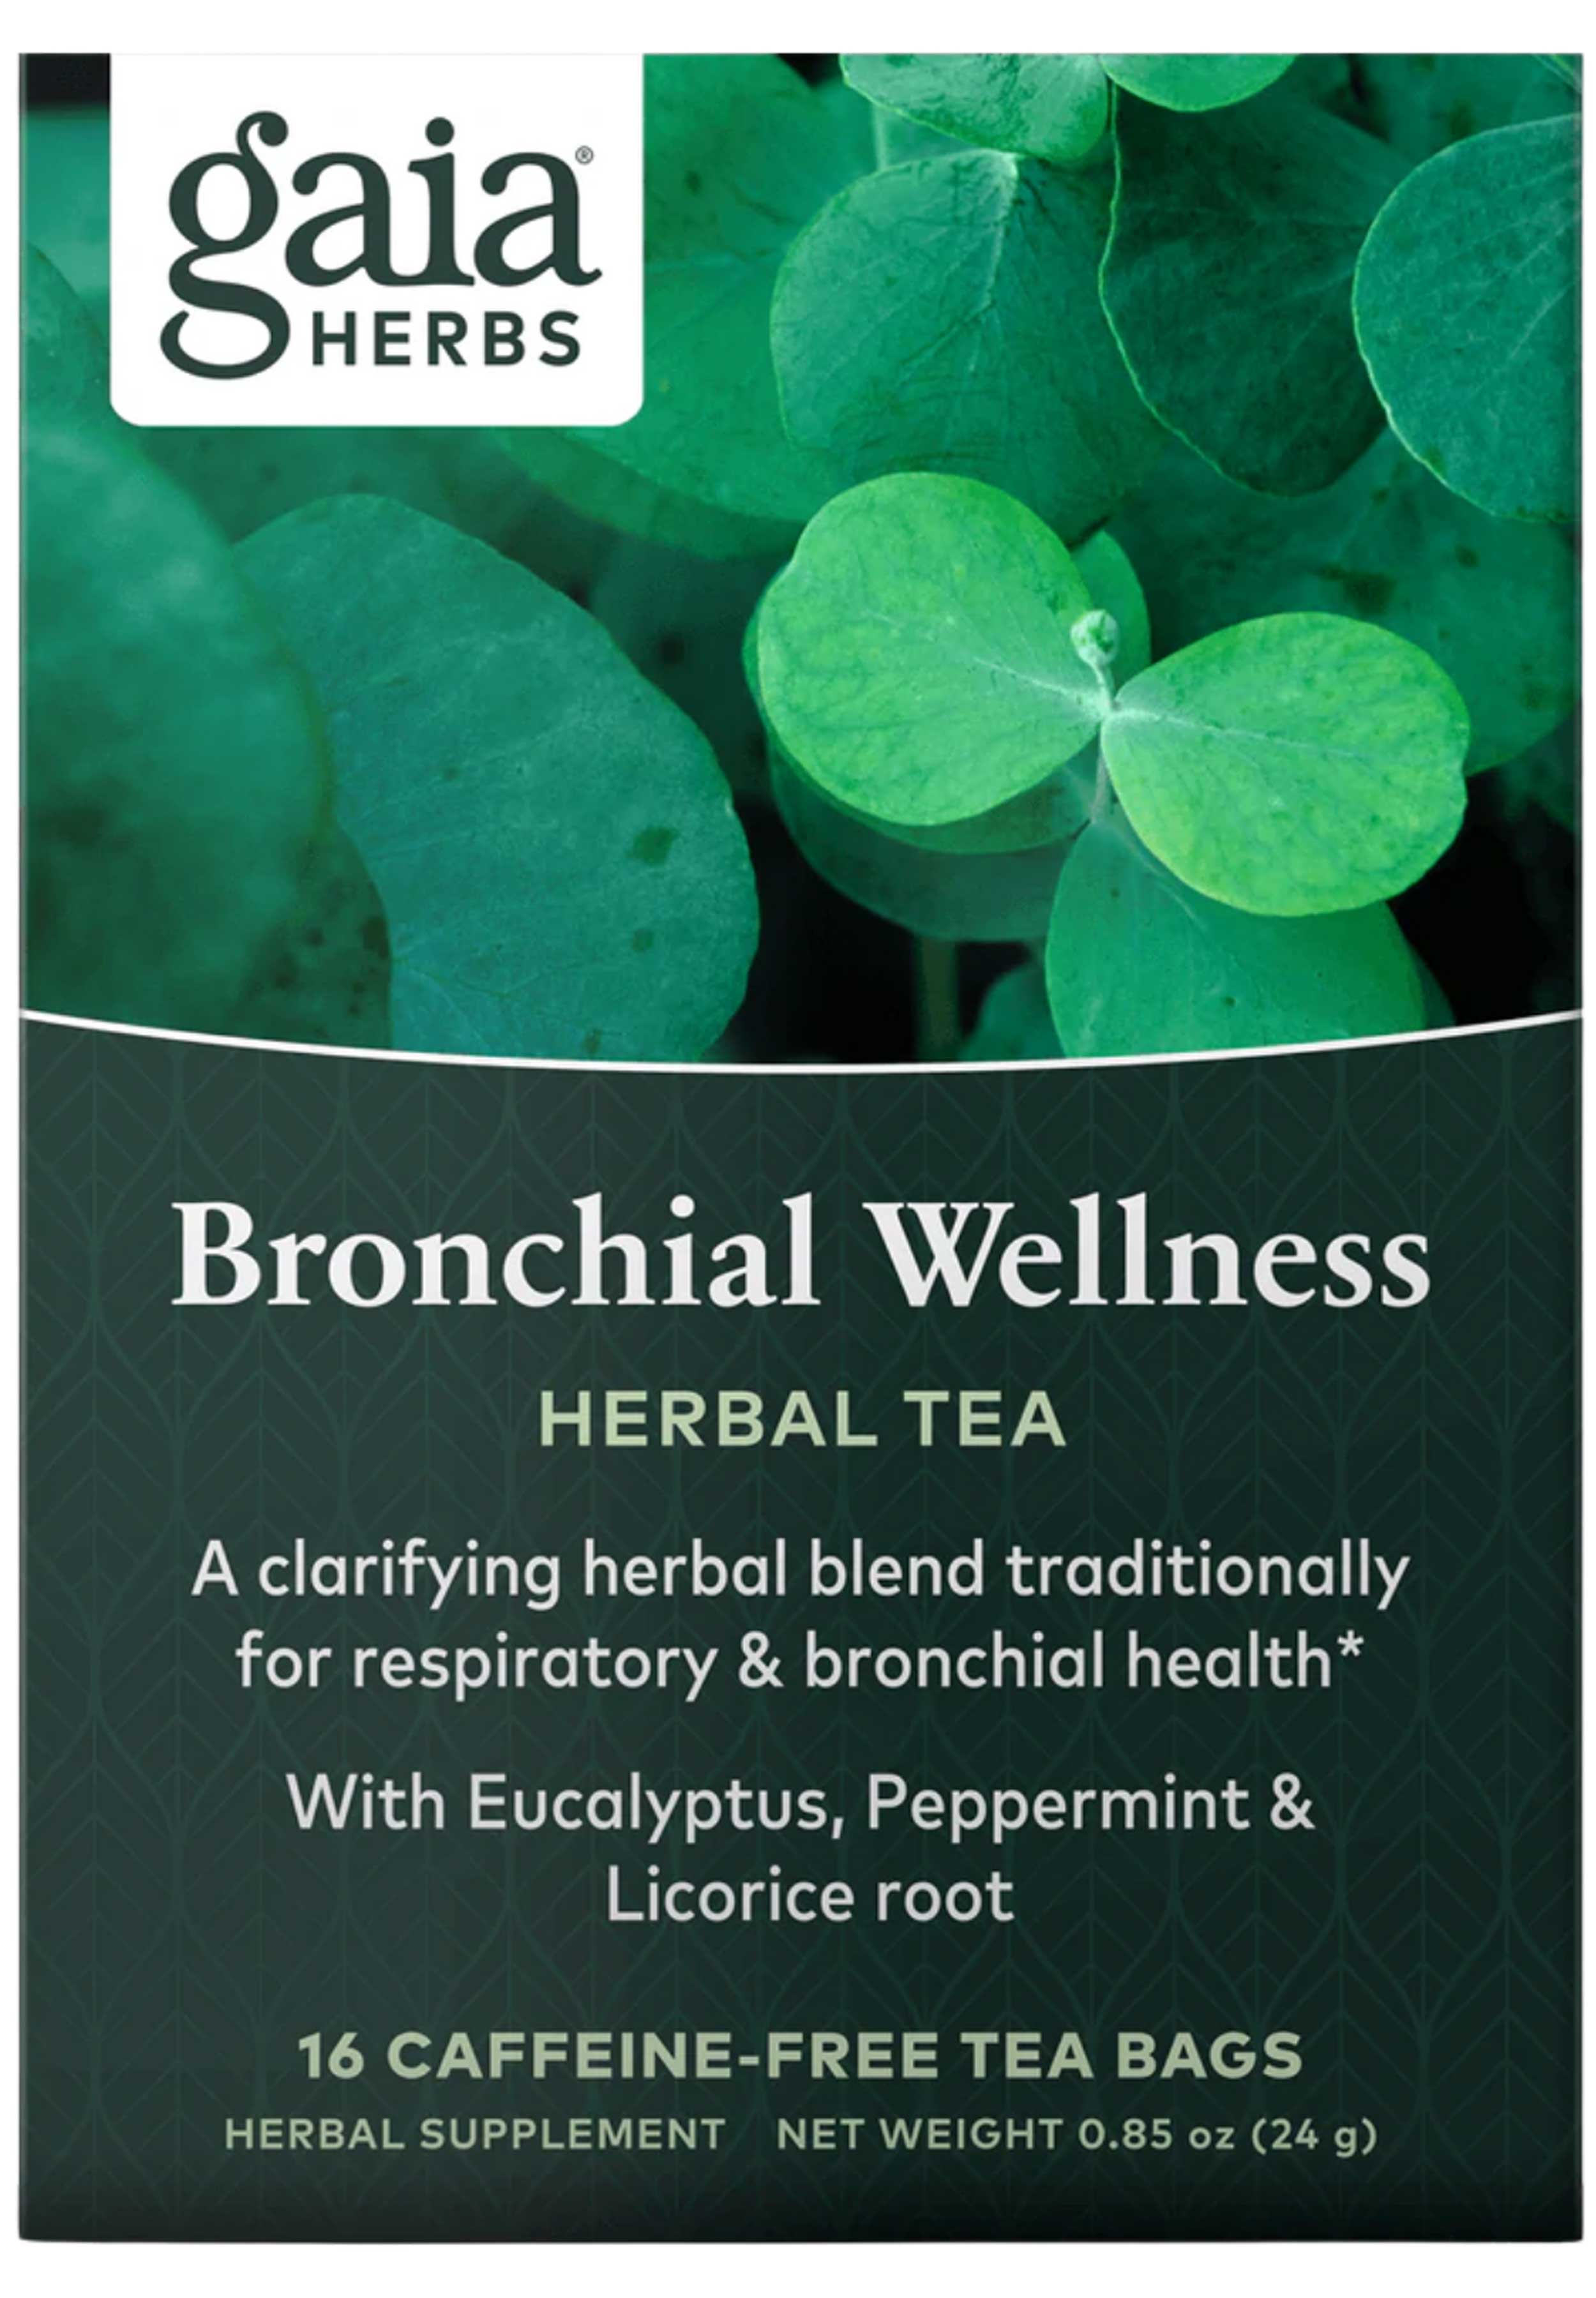 Gaia Herbs Bronchial Wellness Tea